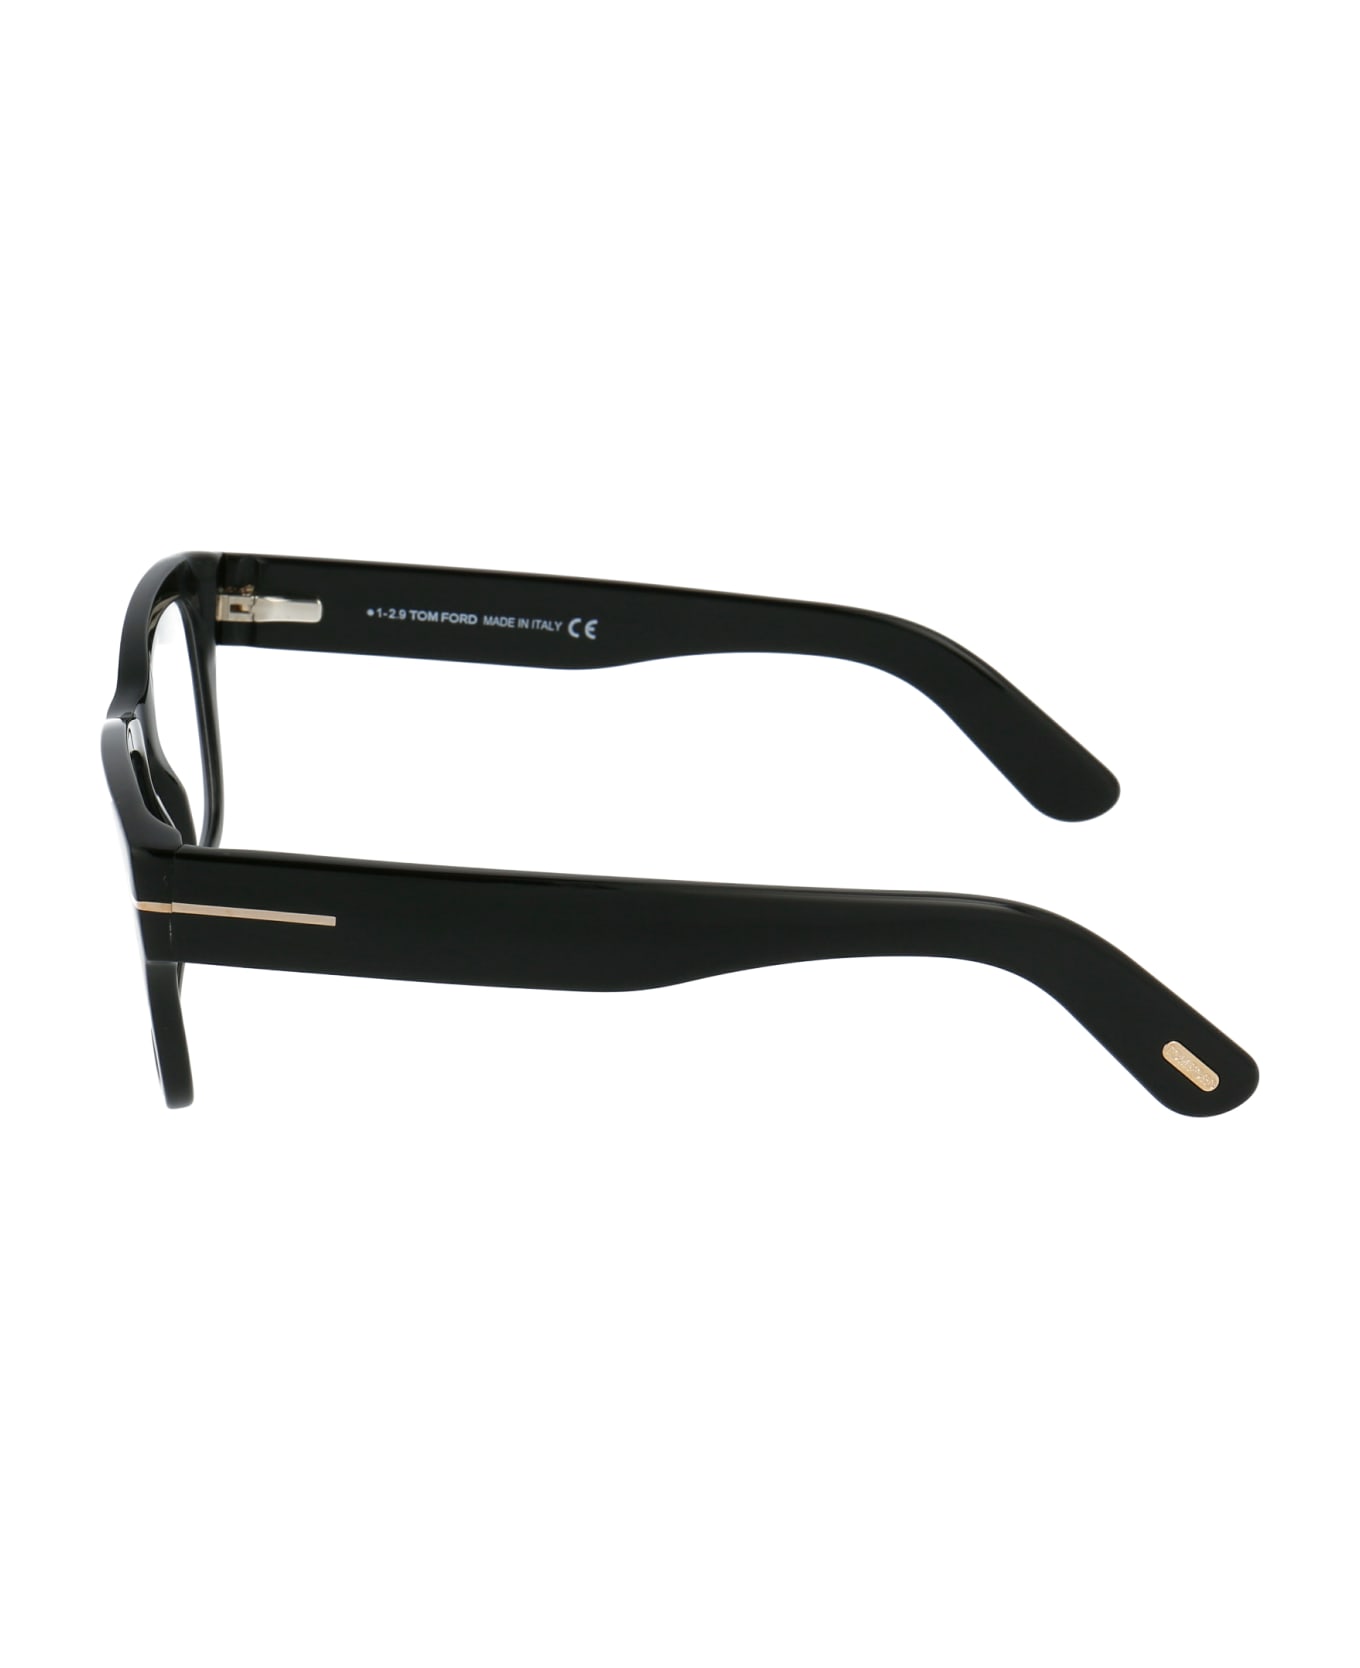 Tom Ford Eyewear Ft5379 Glasses - 001 Nero Lucido アイウェア